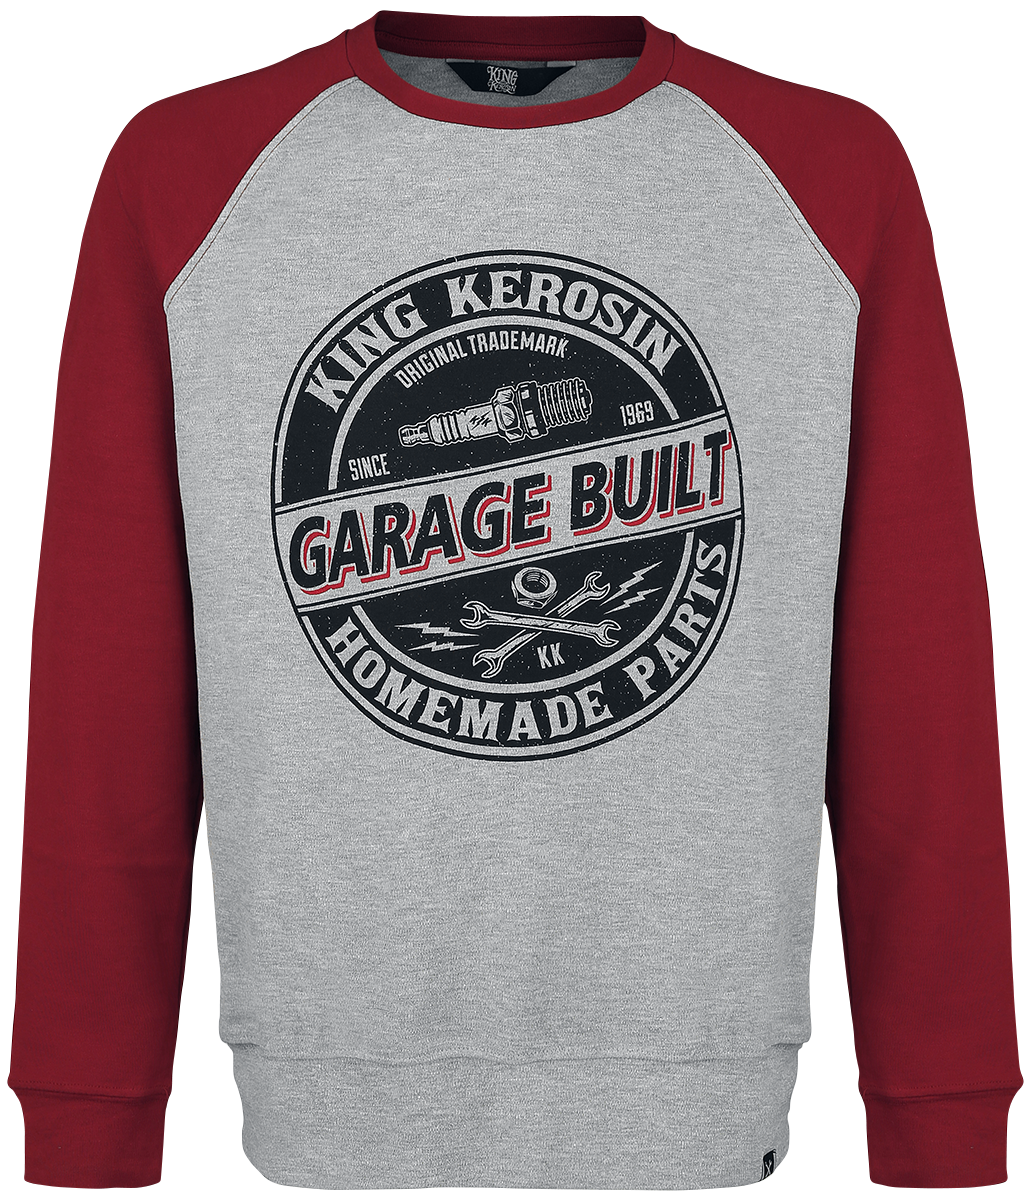 King Kerosin - Garage Built - Sweatshirt - grey-red image